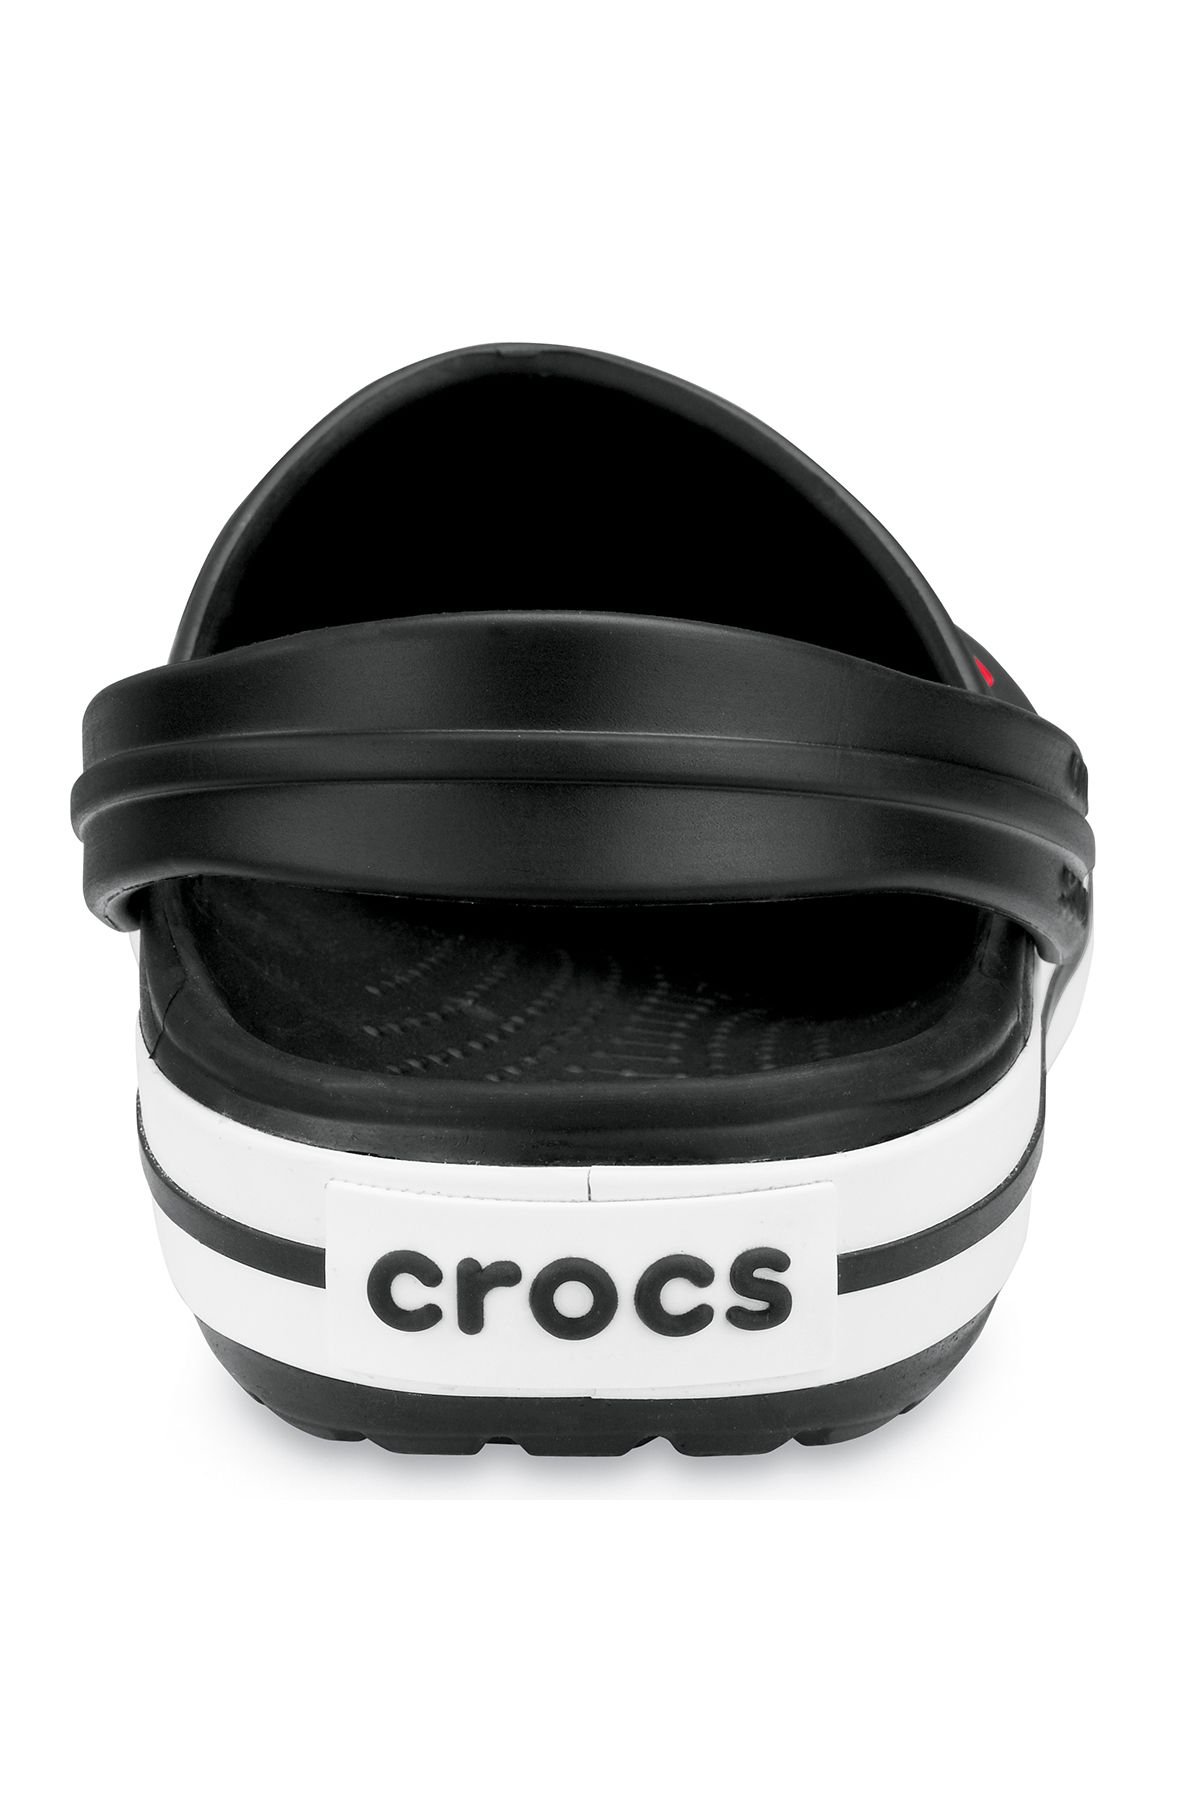 Crocs دمپایی سیاه و سفید ارتوپدی unisex